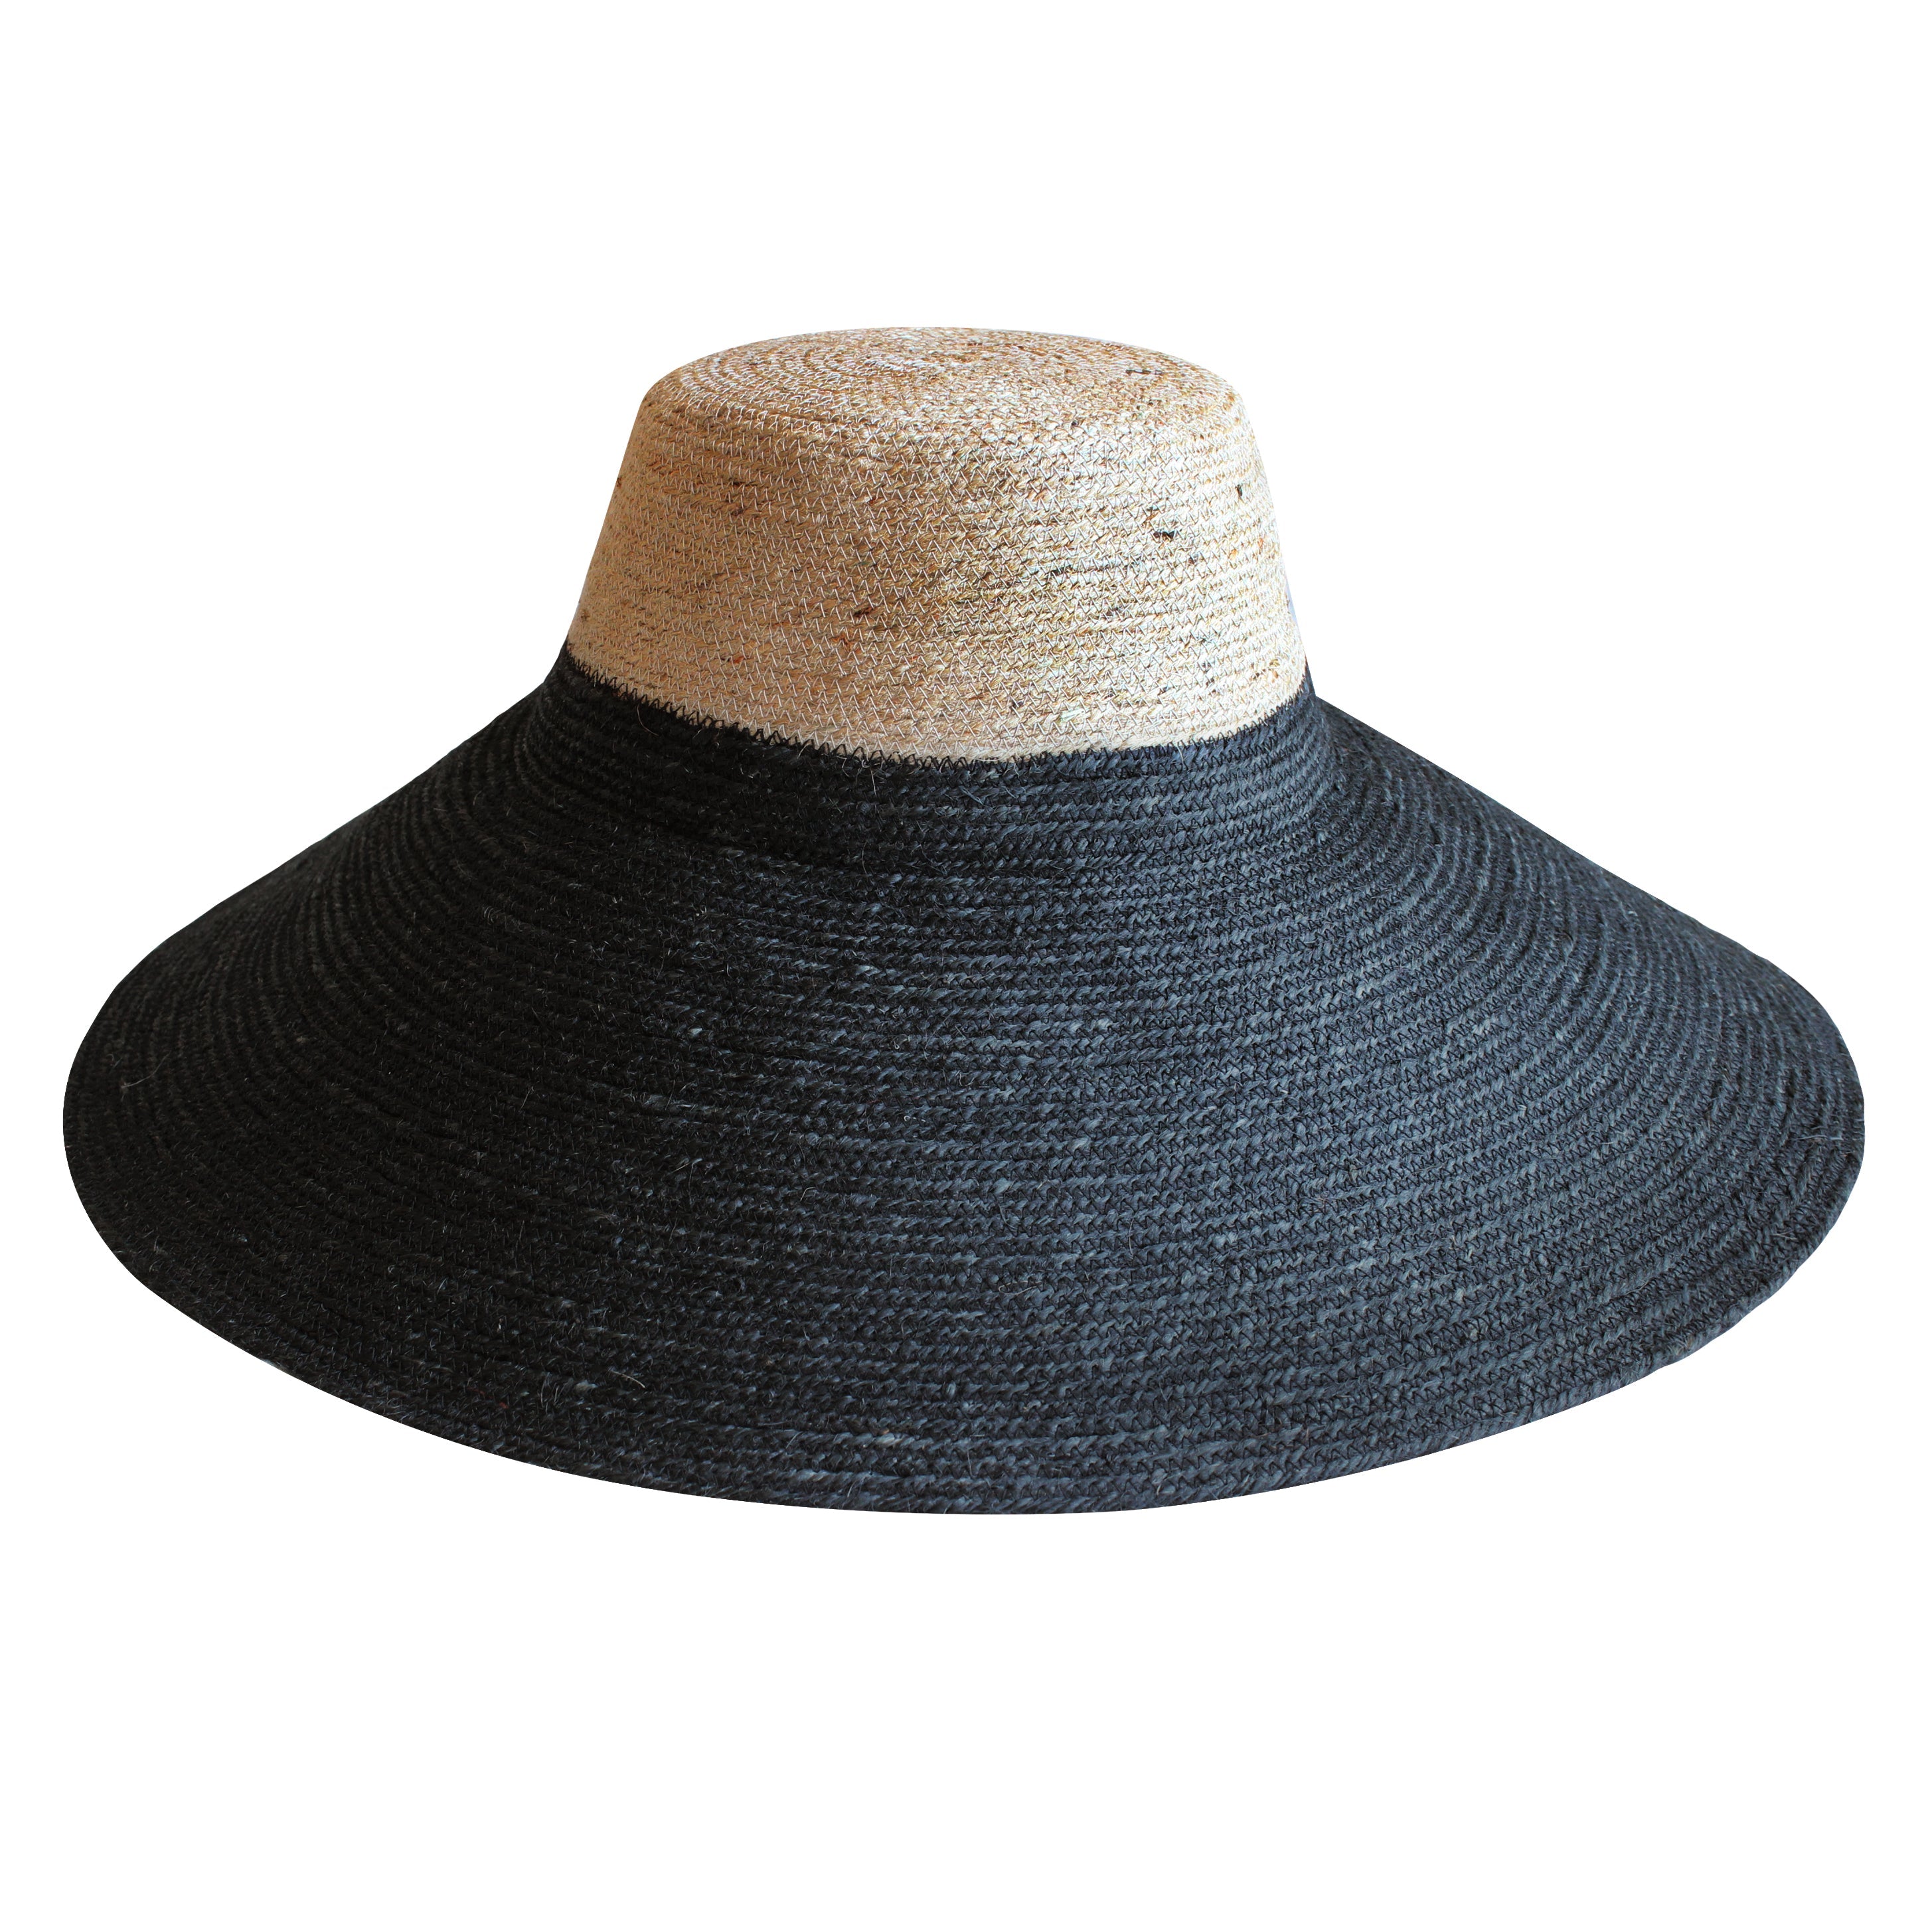 Riri Duo Jute Straw Hat, in Black & Nude